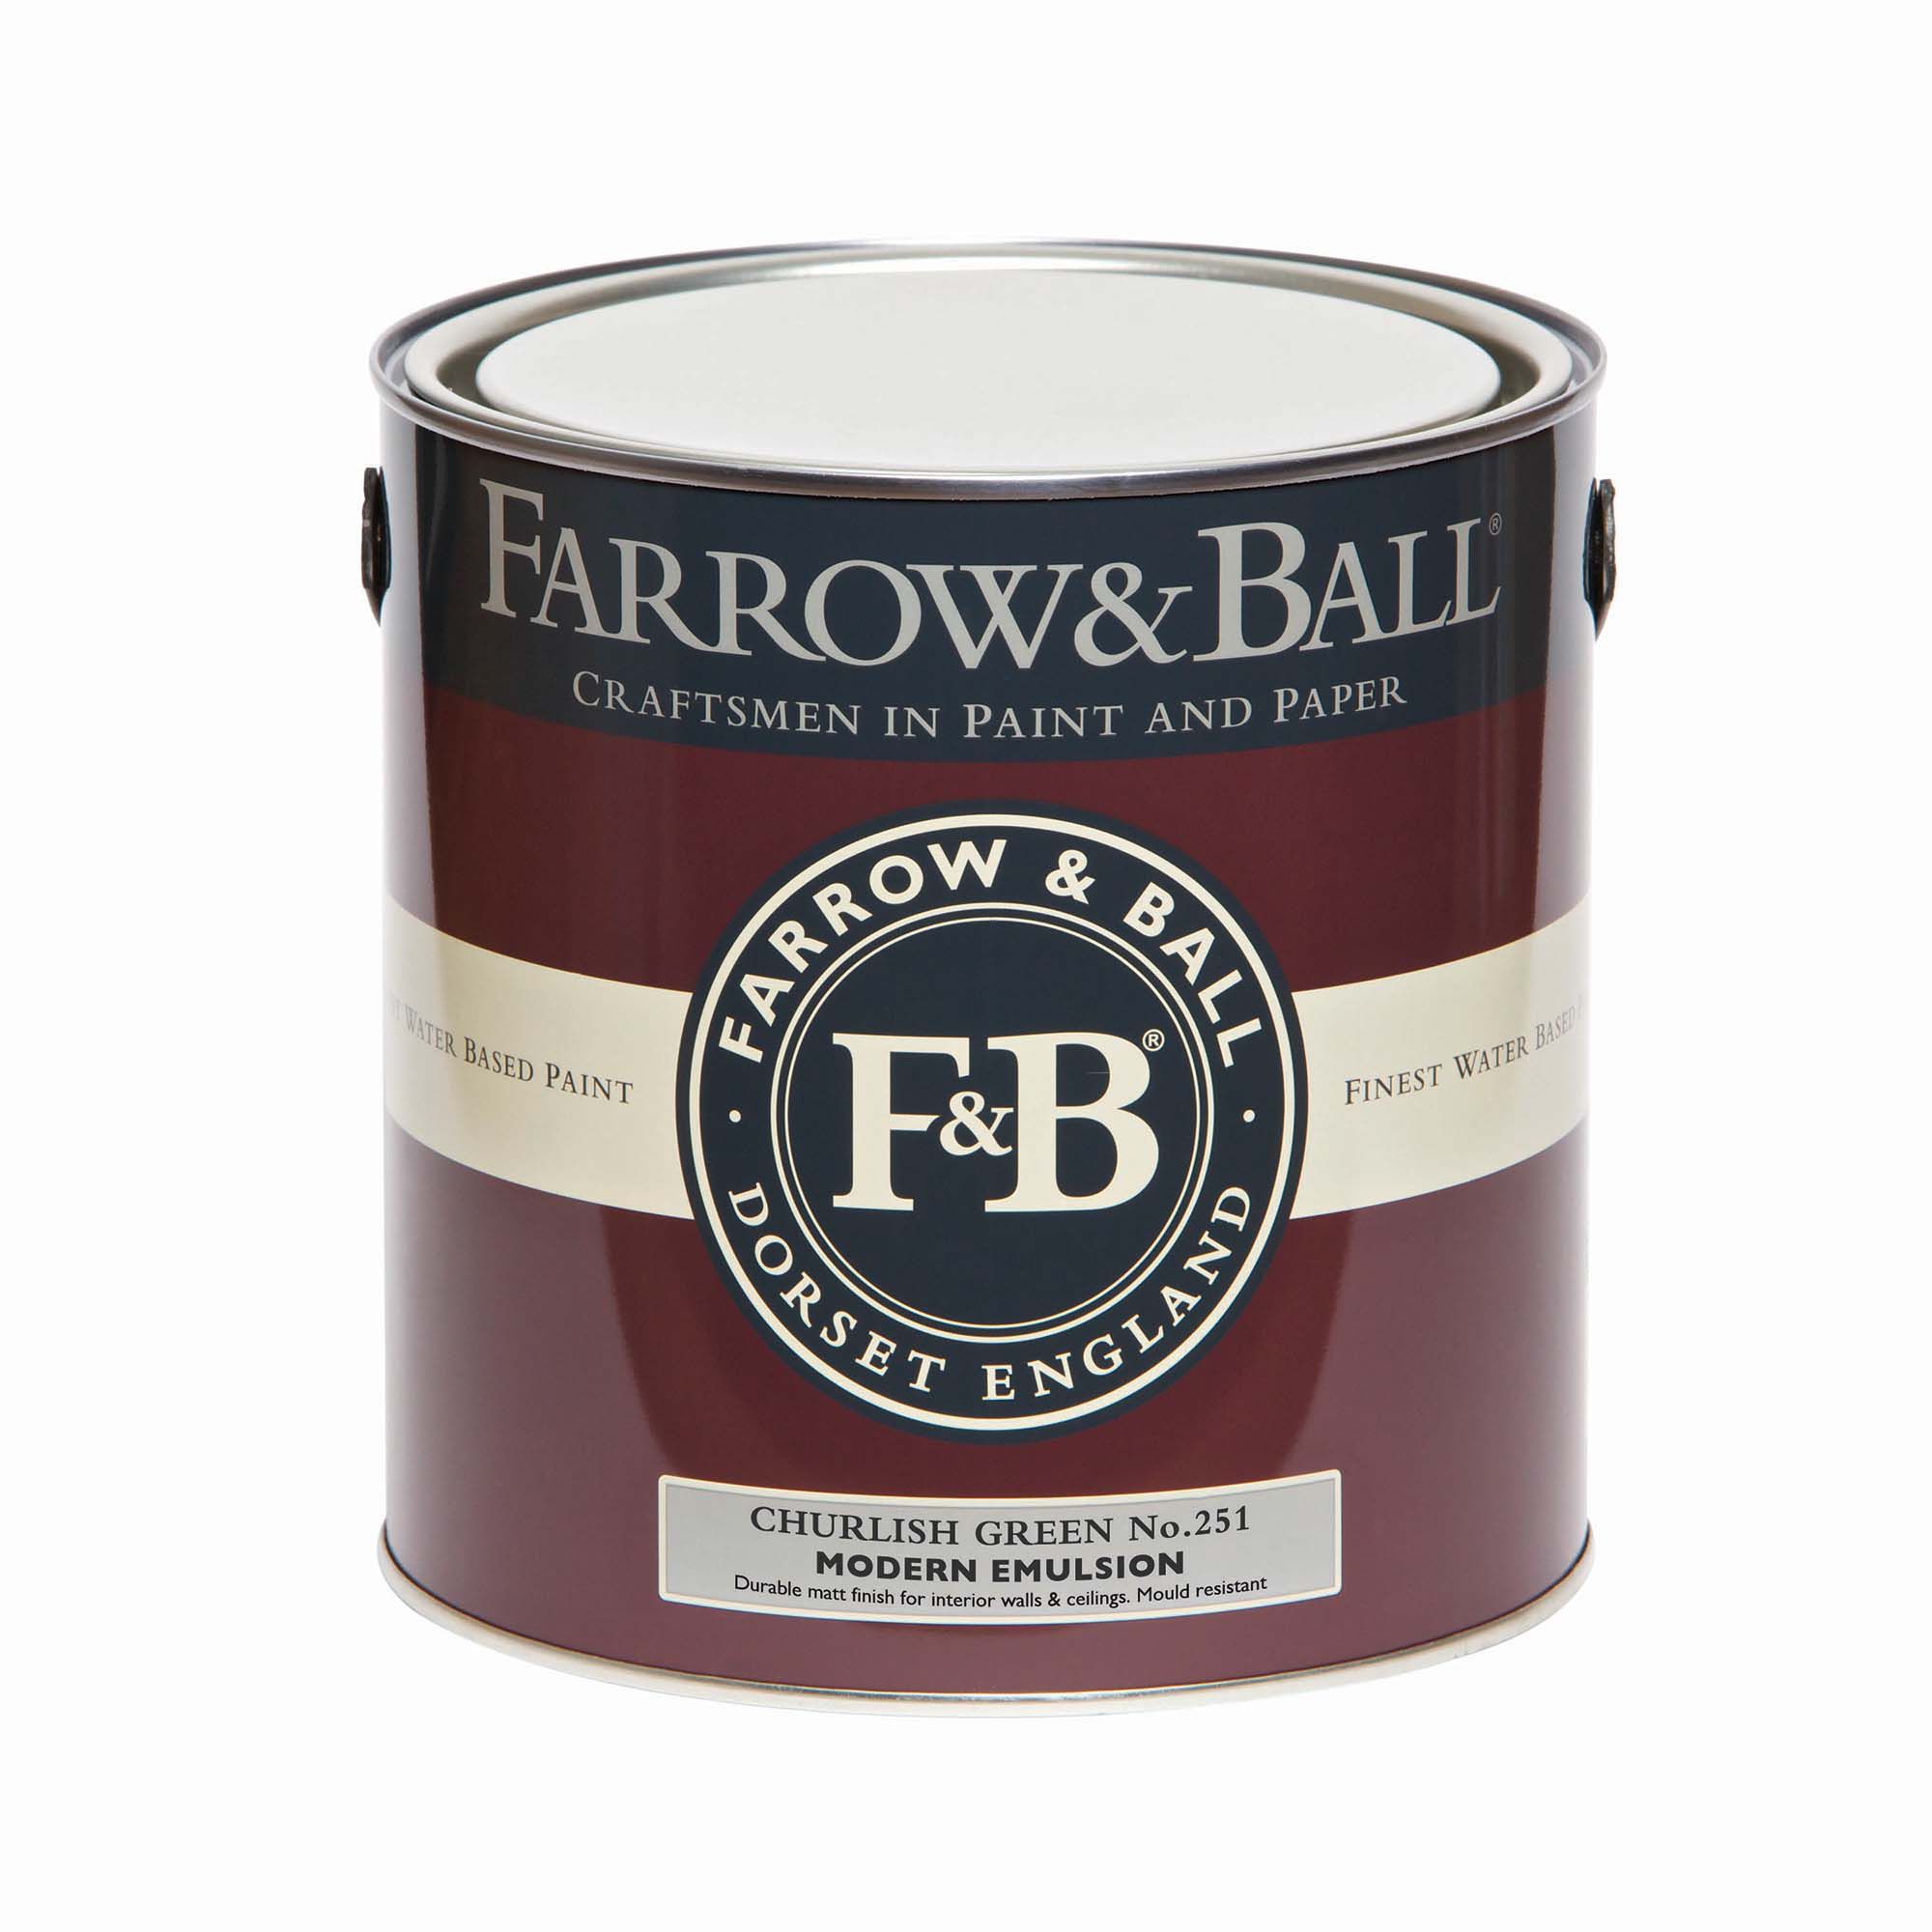 Farrow & Ball Modern Churlish Green No.251 Matt Emulsion paint, 2.5L